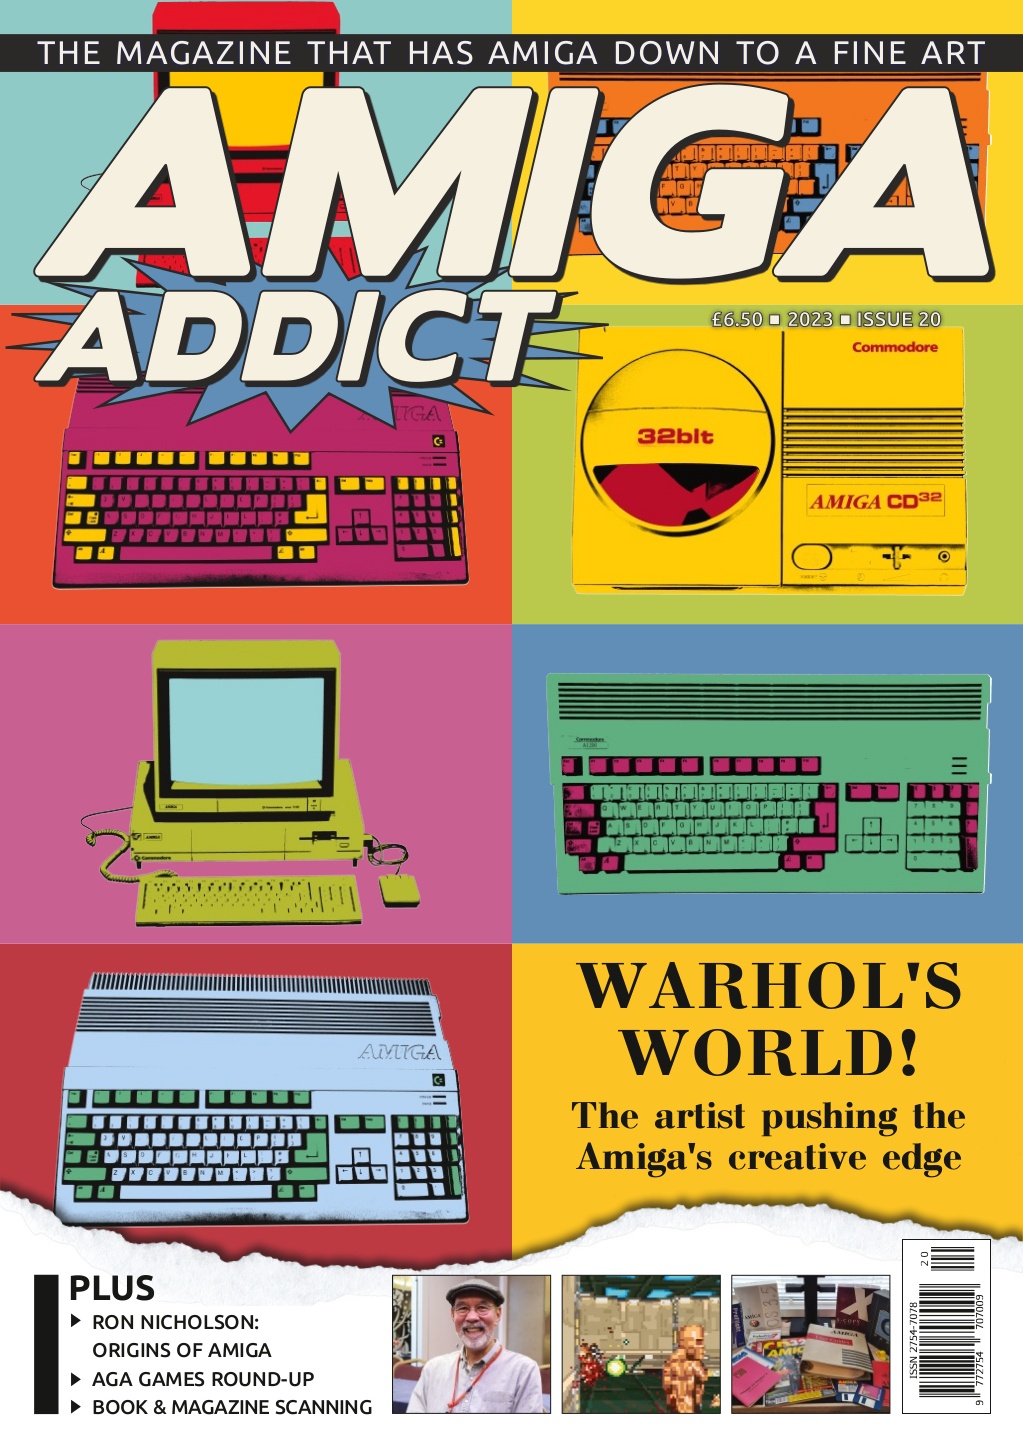 Andy Warhol - Issue 20 Amiga Addict magazine